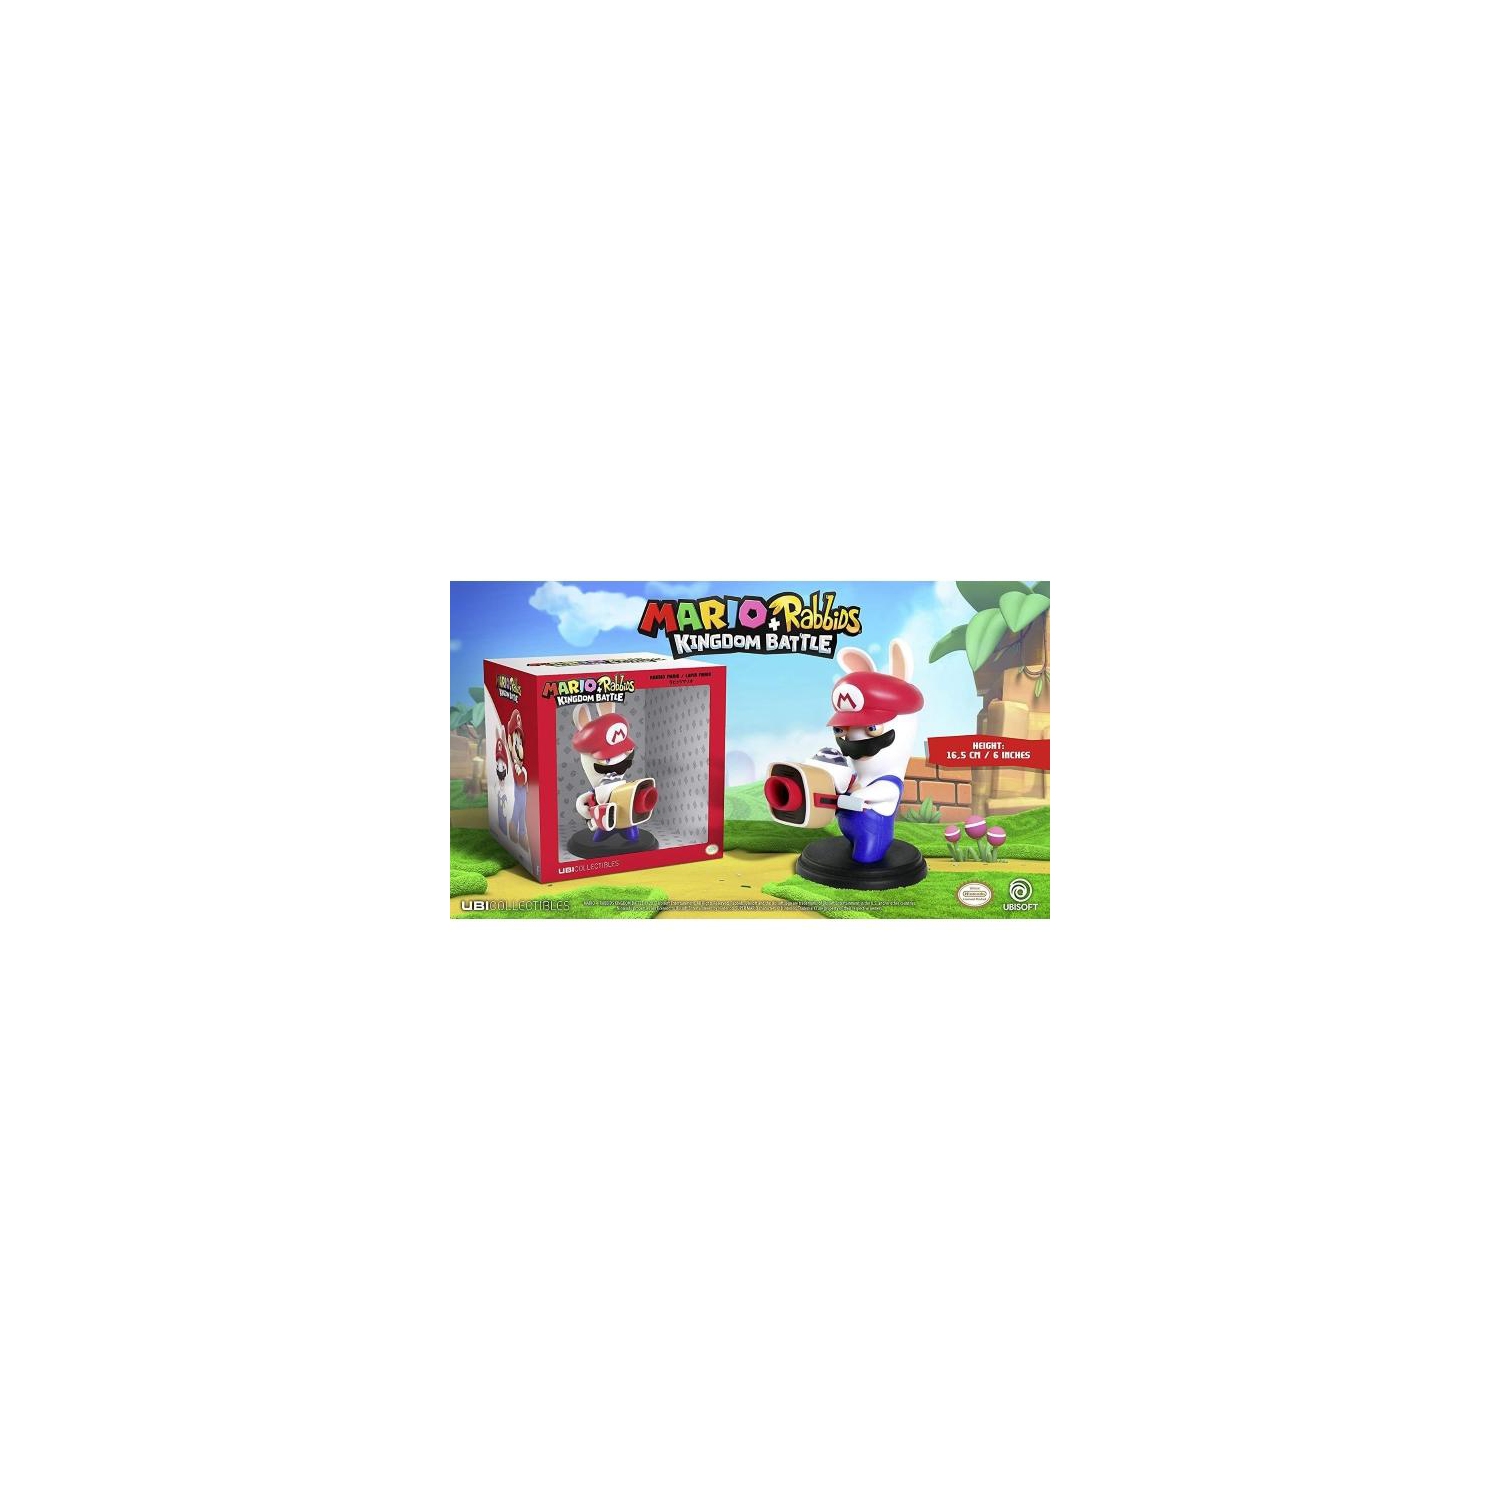 Mario + Rabbids Kingdom Battle: Rabbid Mario 6" Figurine [Toys, Ages 3+]